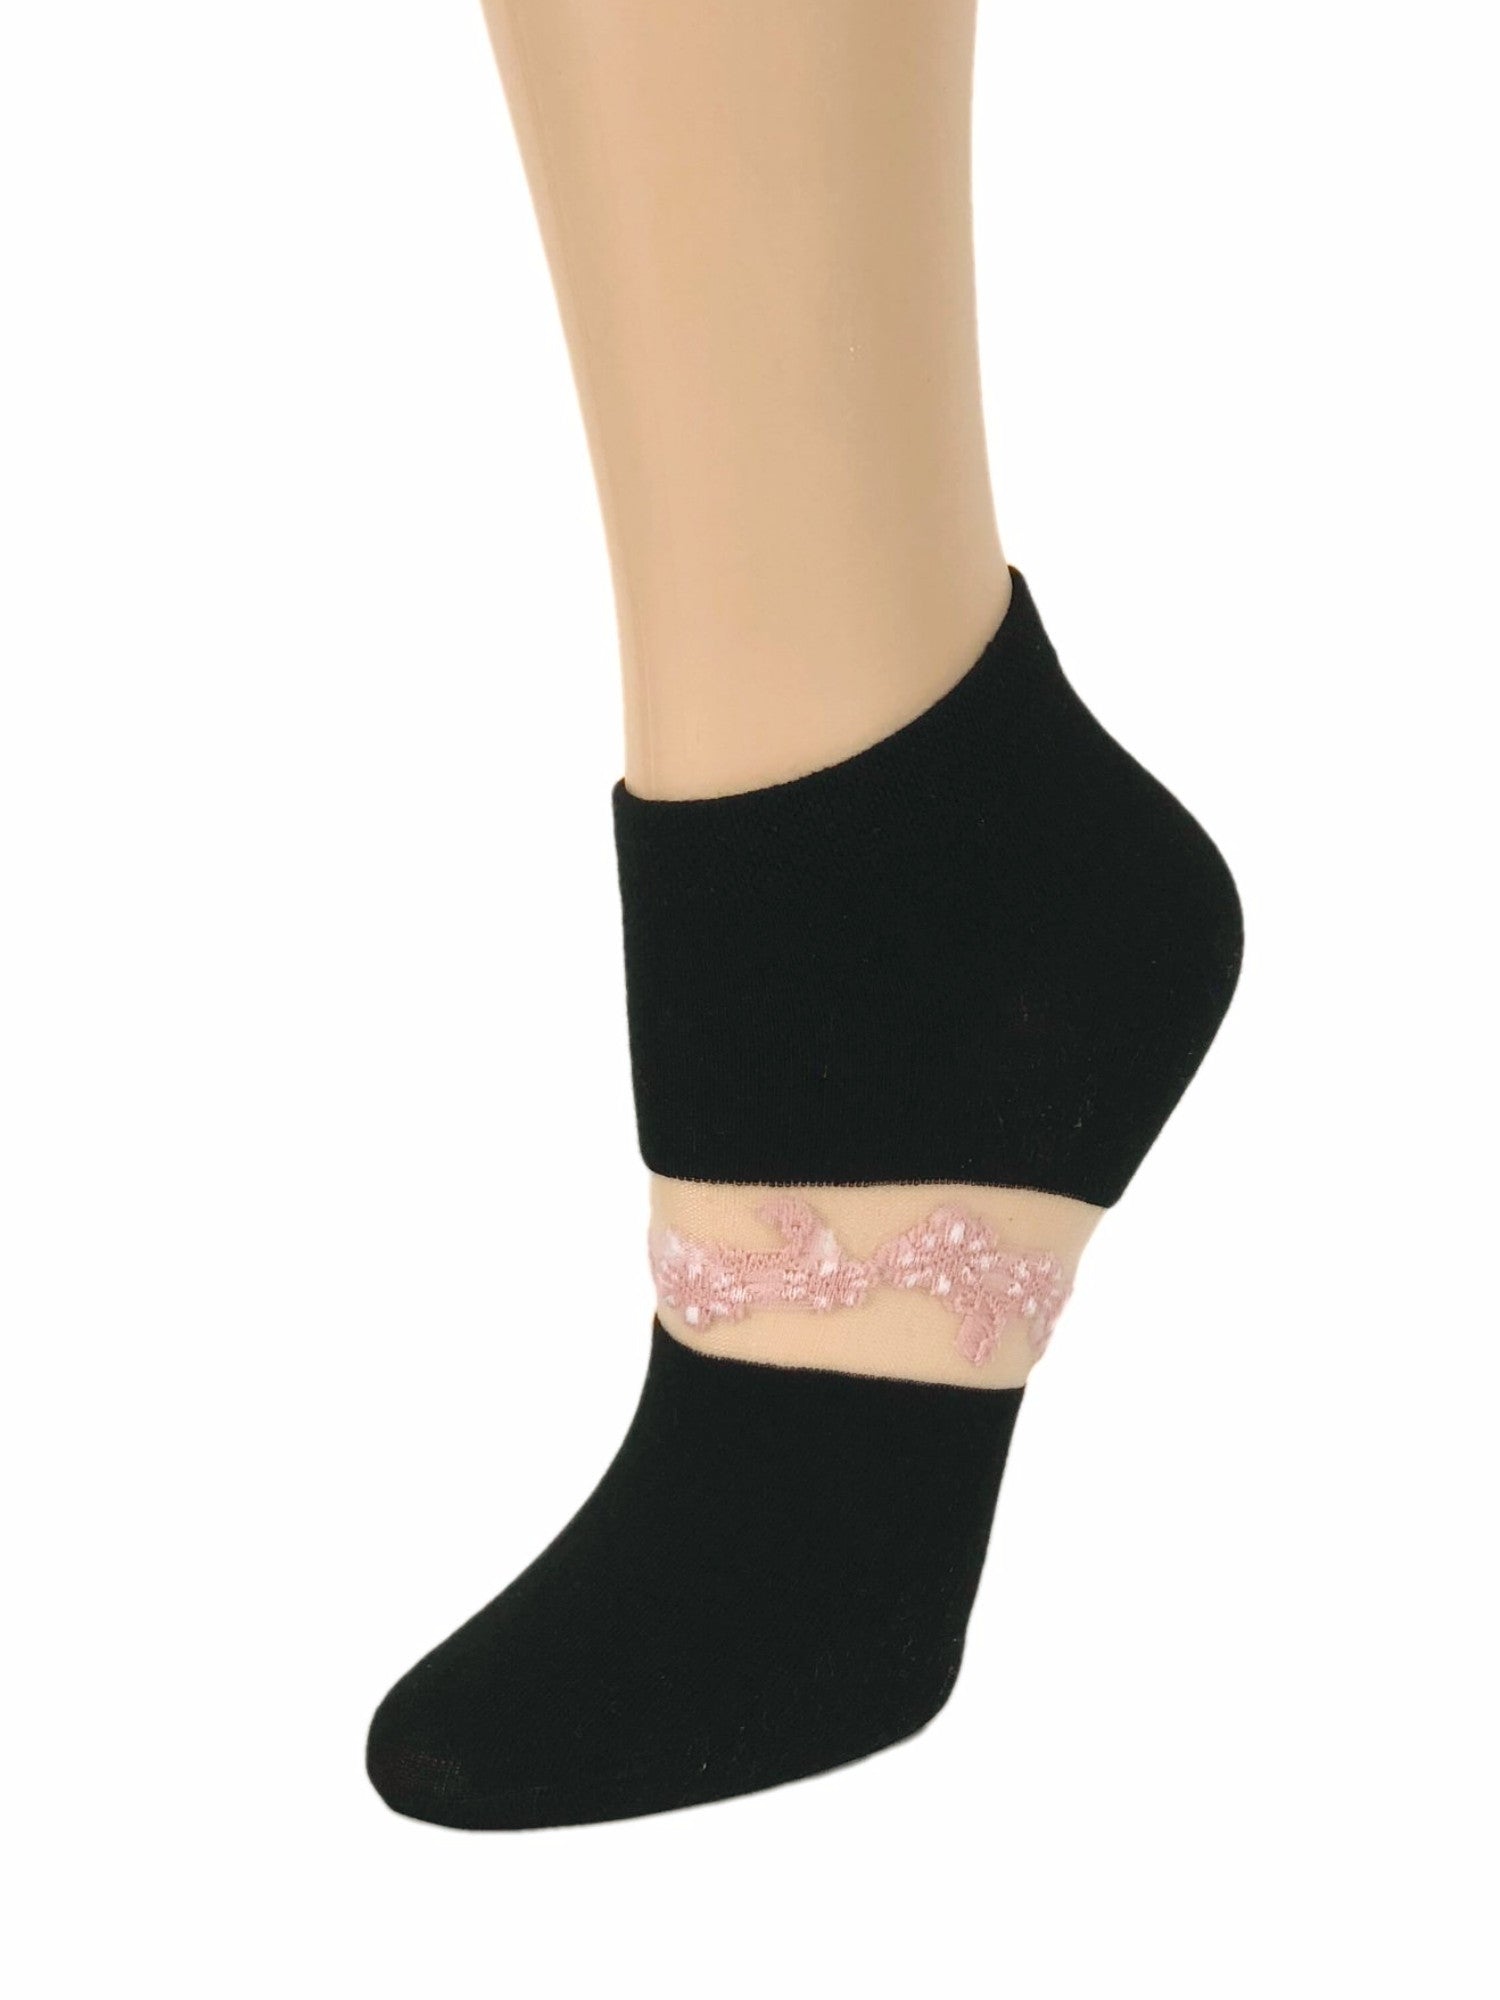 One-Stripped Pink Flower Ankle Sheer Socks - Global Trendz Fashion®